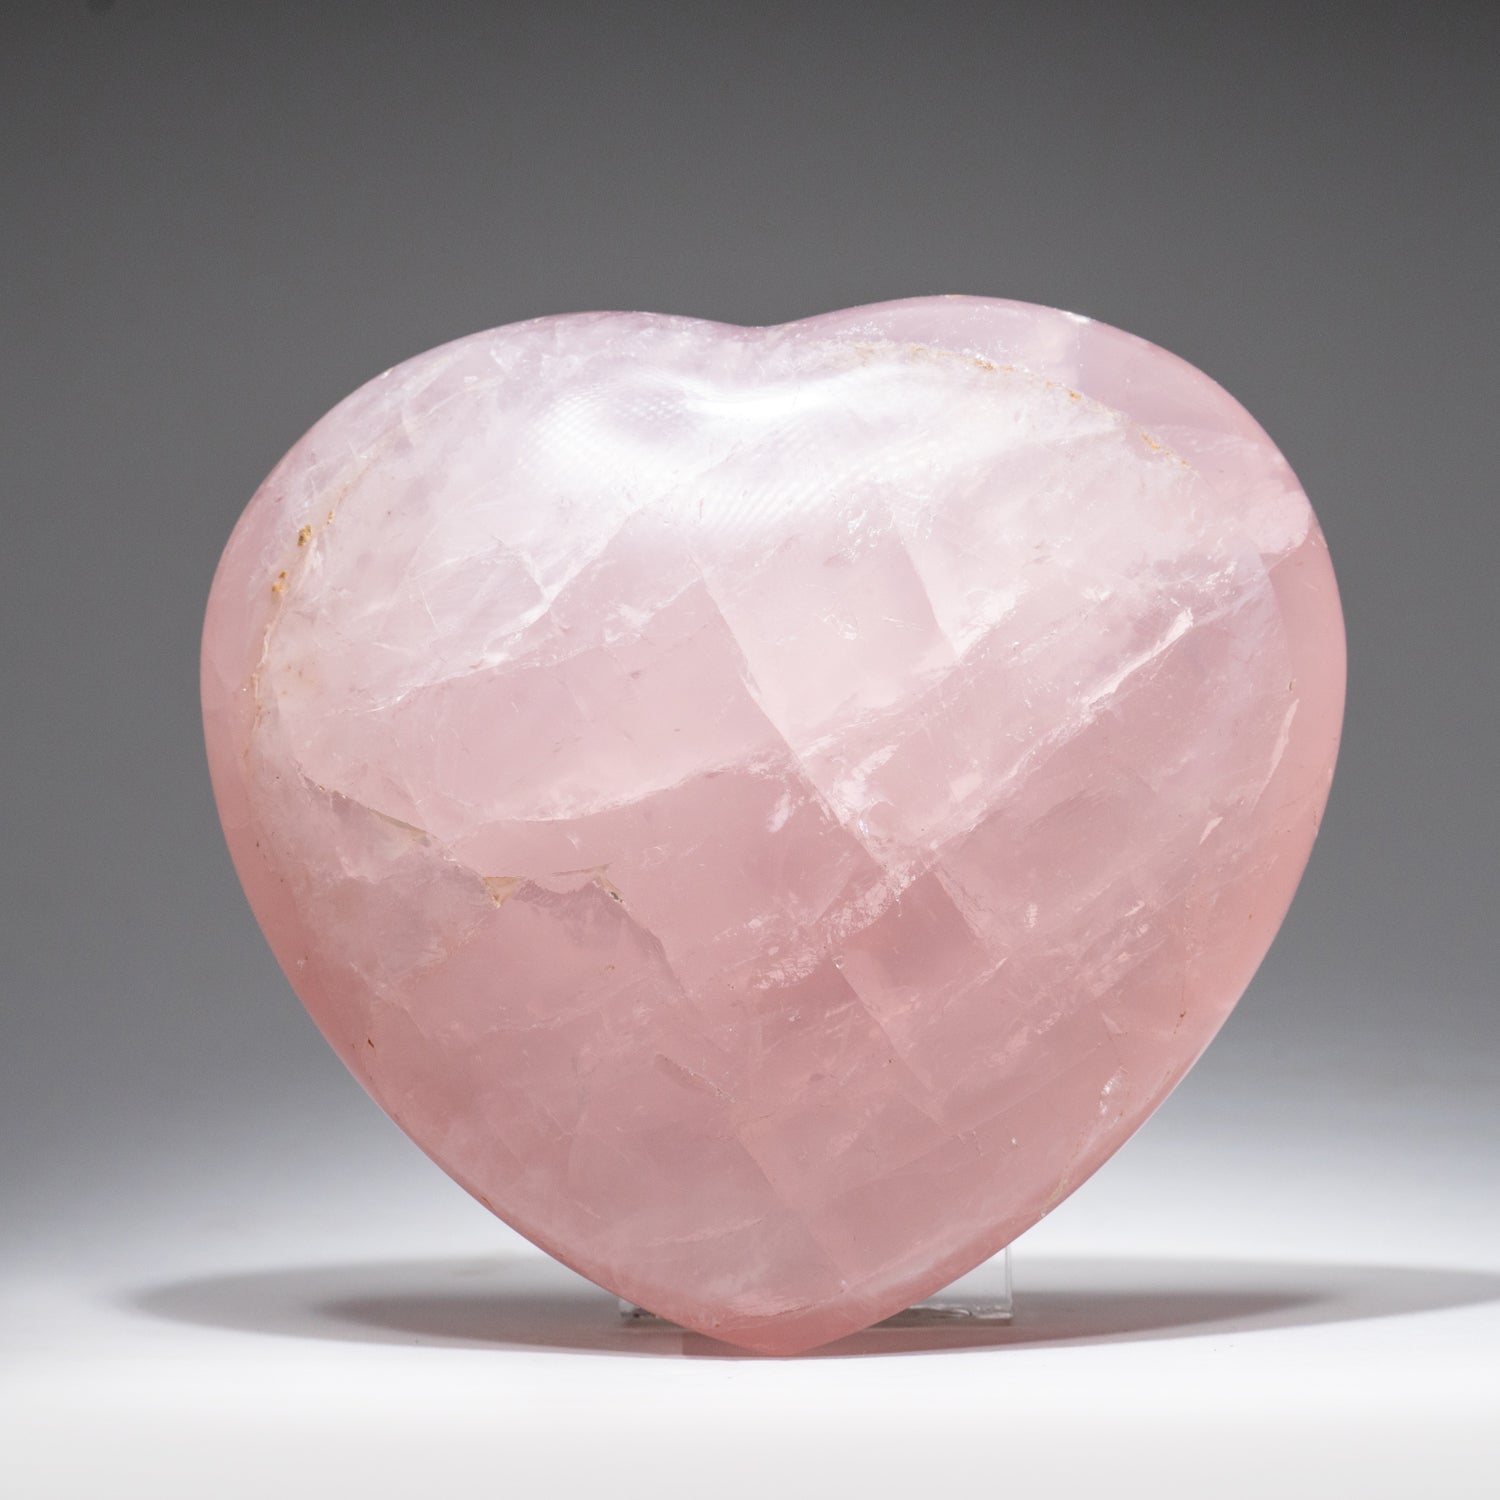 Genuine Polished Rose Quartz Heart from Brazil (1.6 lbs)